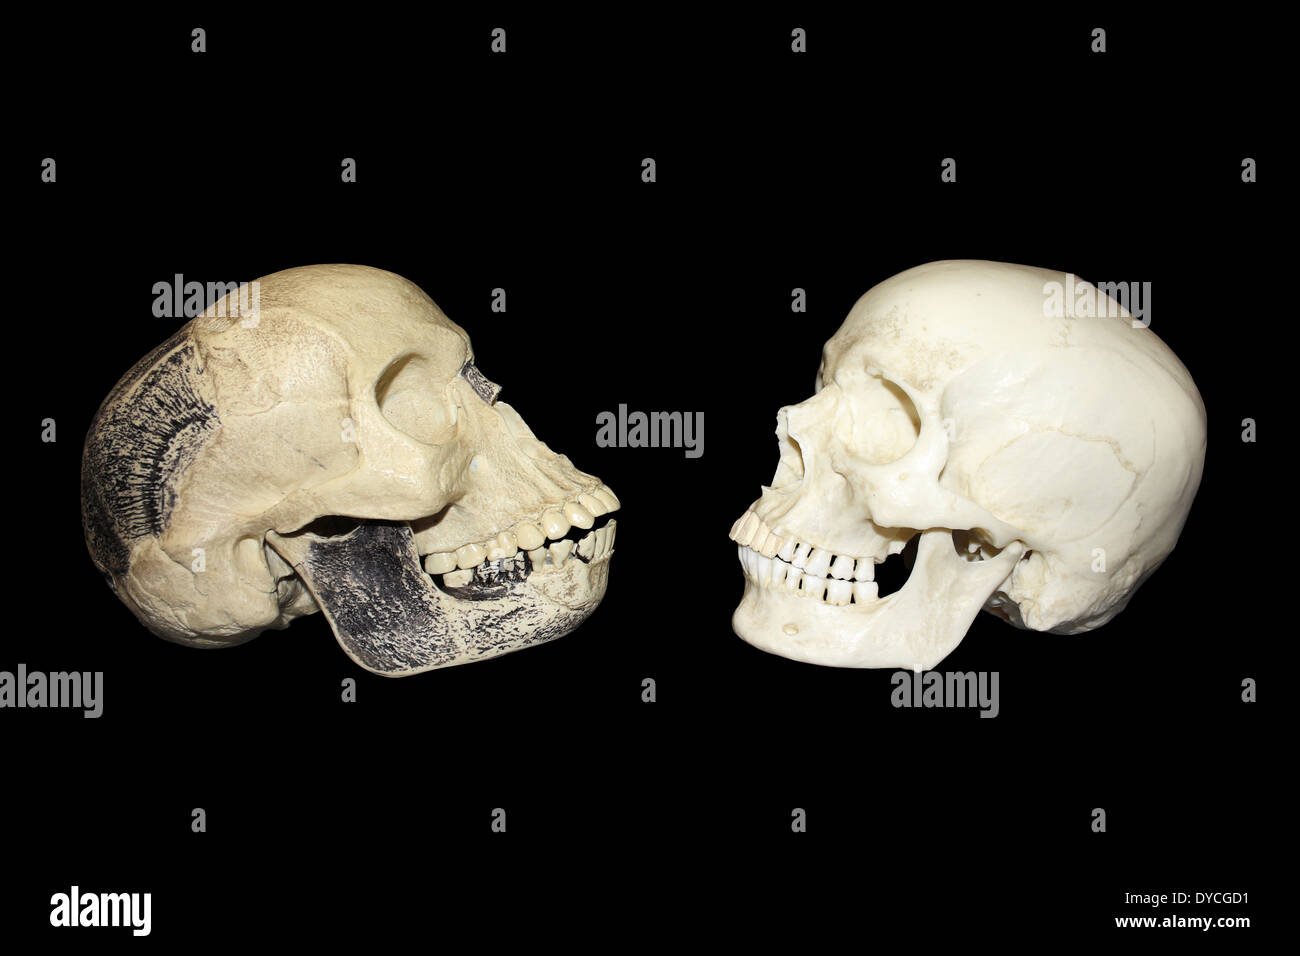 Comparison Between The 'Piltdown Man' Hoax Skull vs Modern Man Homo sapiens Stock Photo